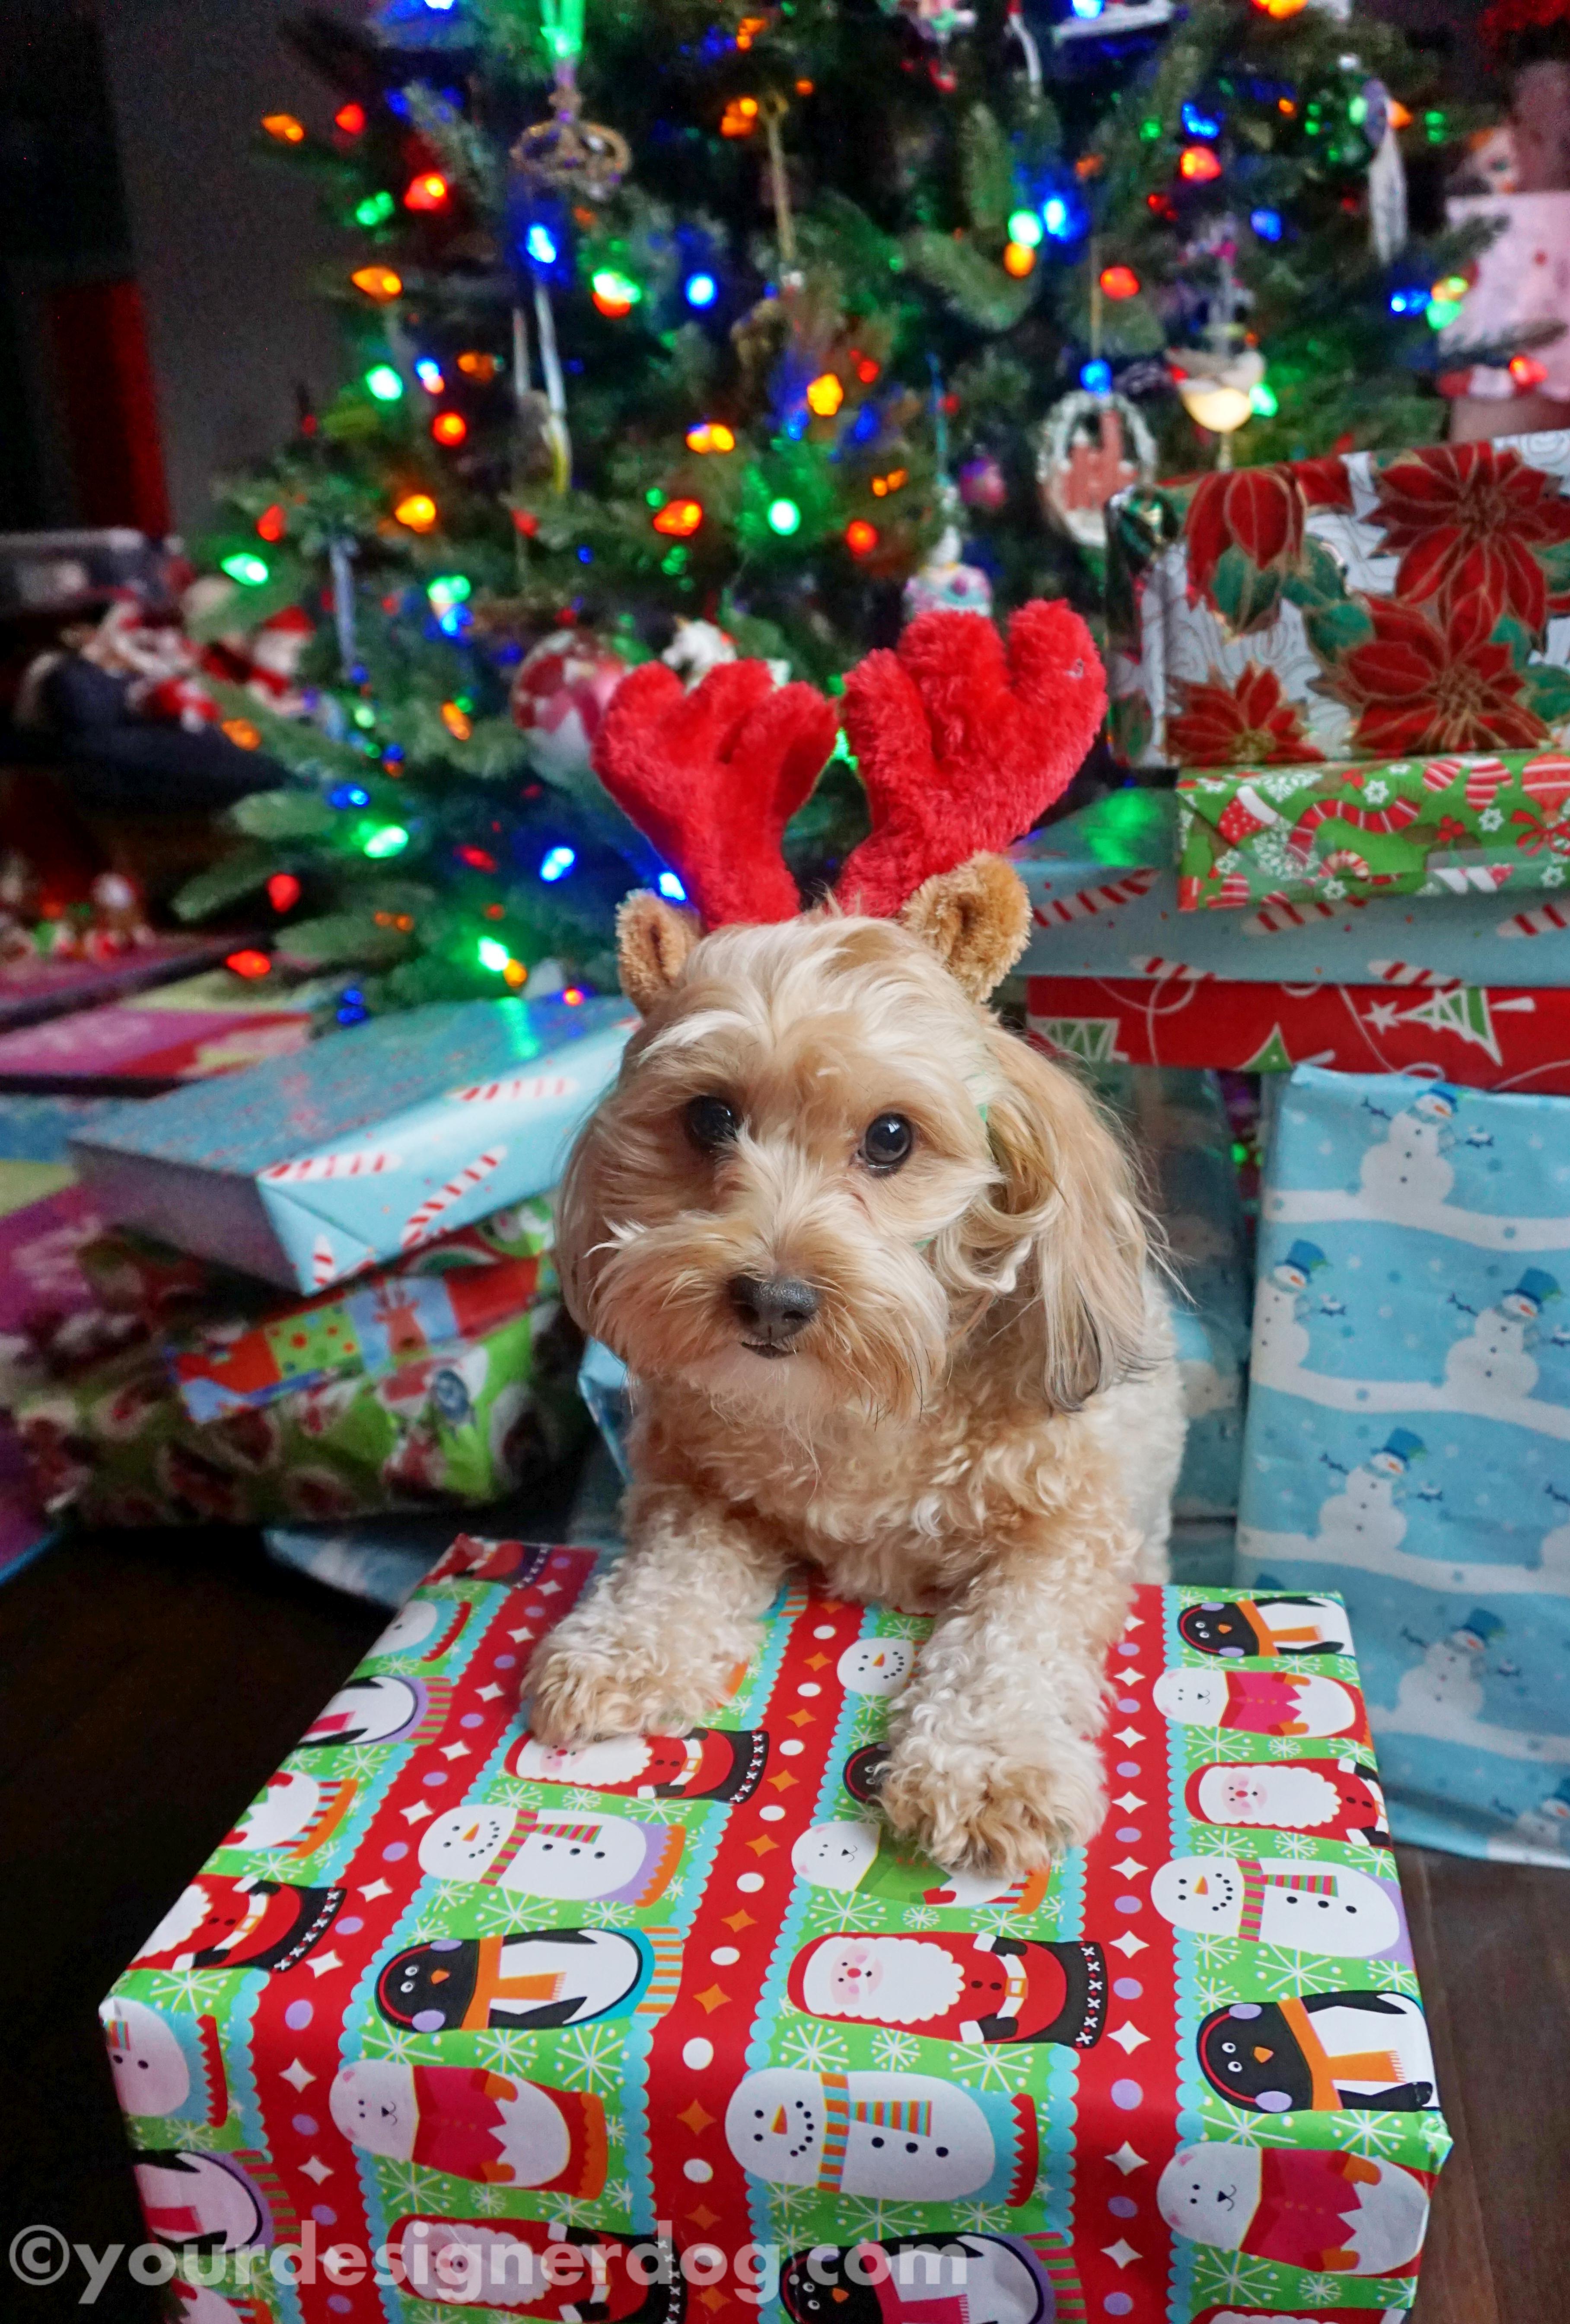 dogs, designer dogs, yorkipoo, yorkie poo, reindeer, christmas tree, presents